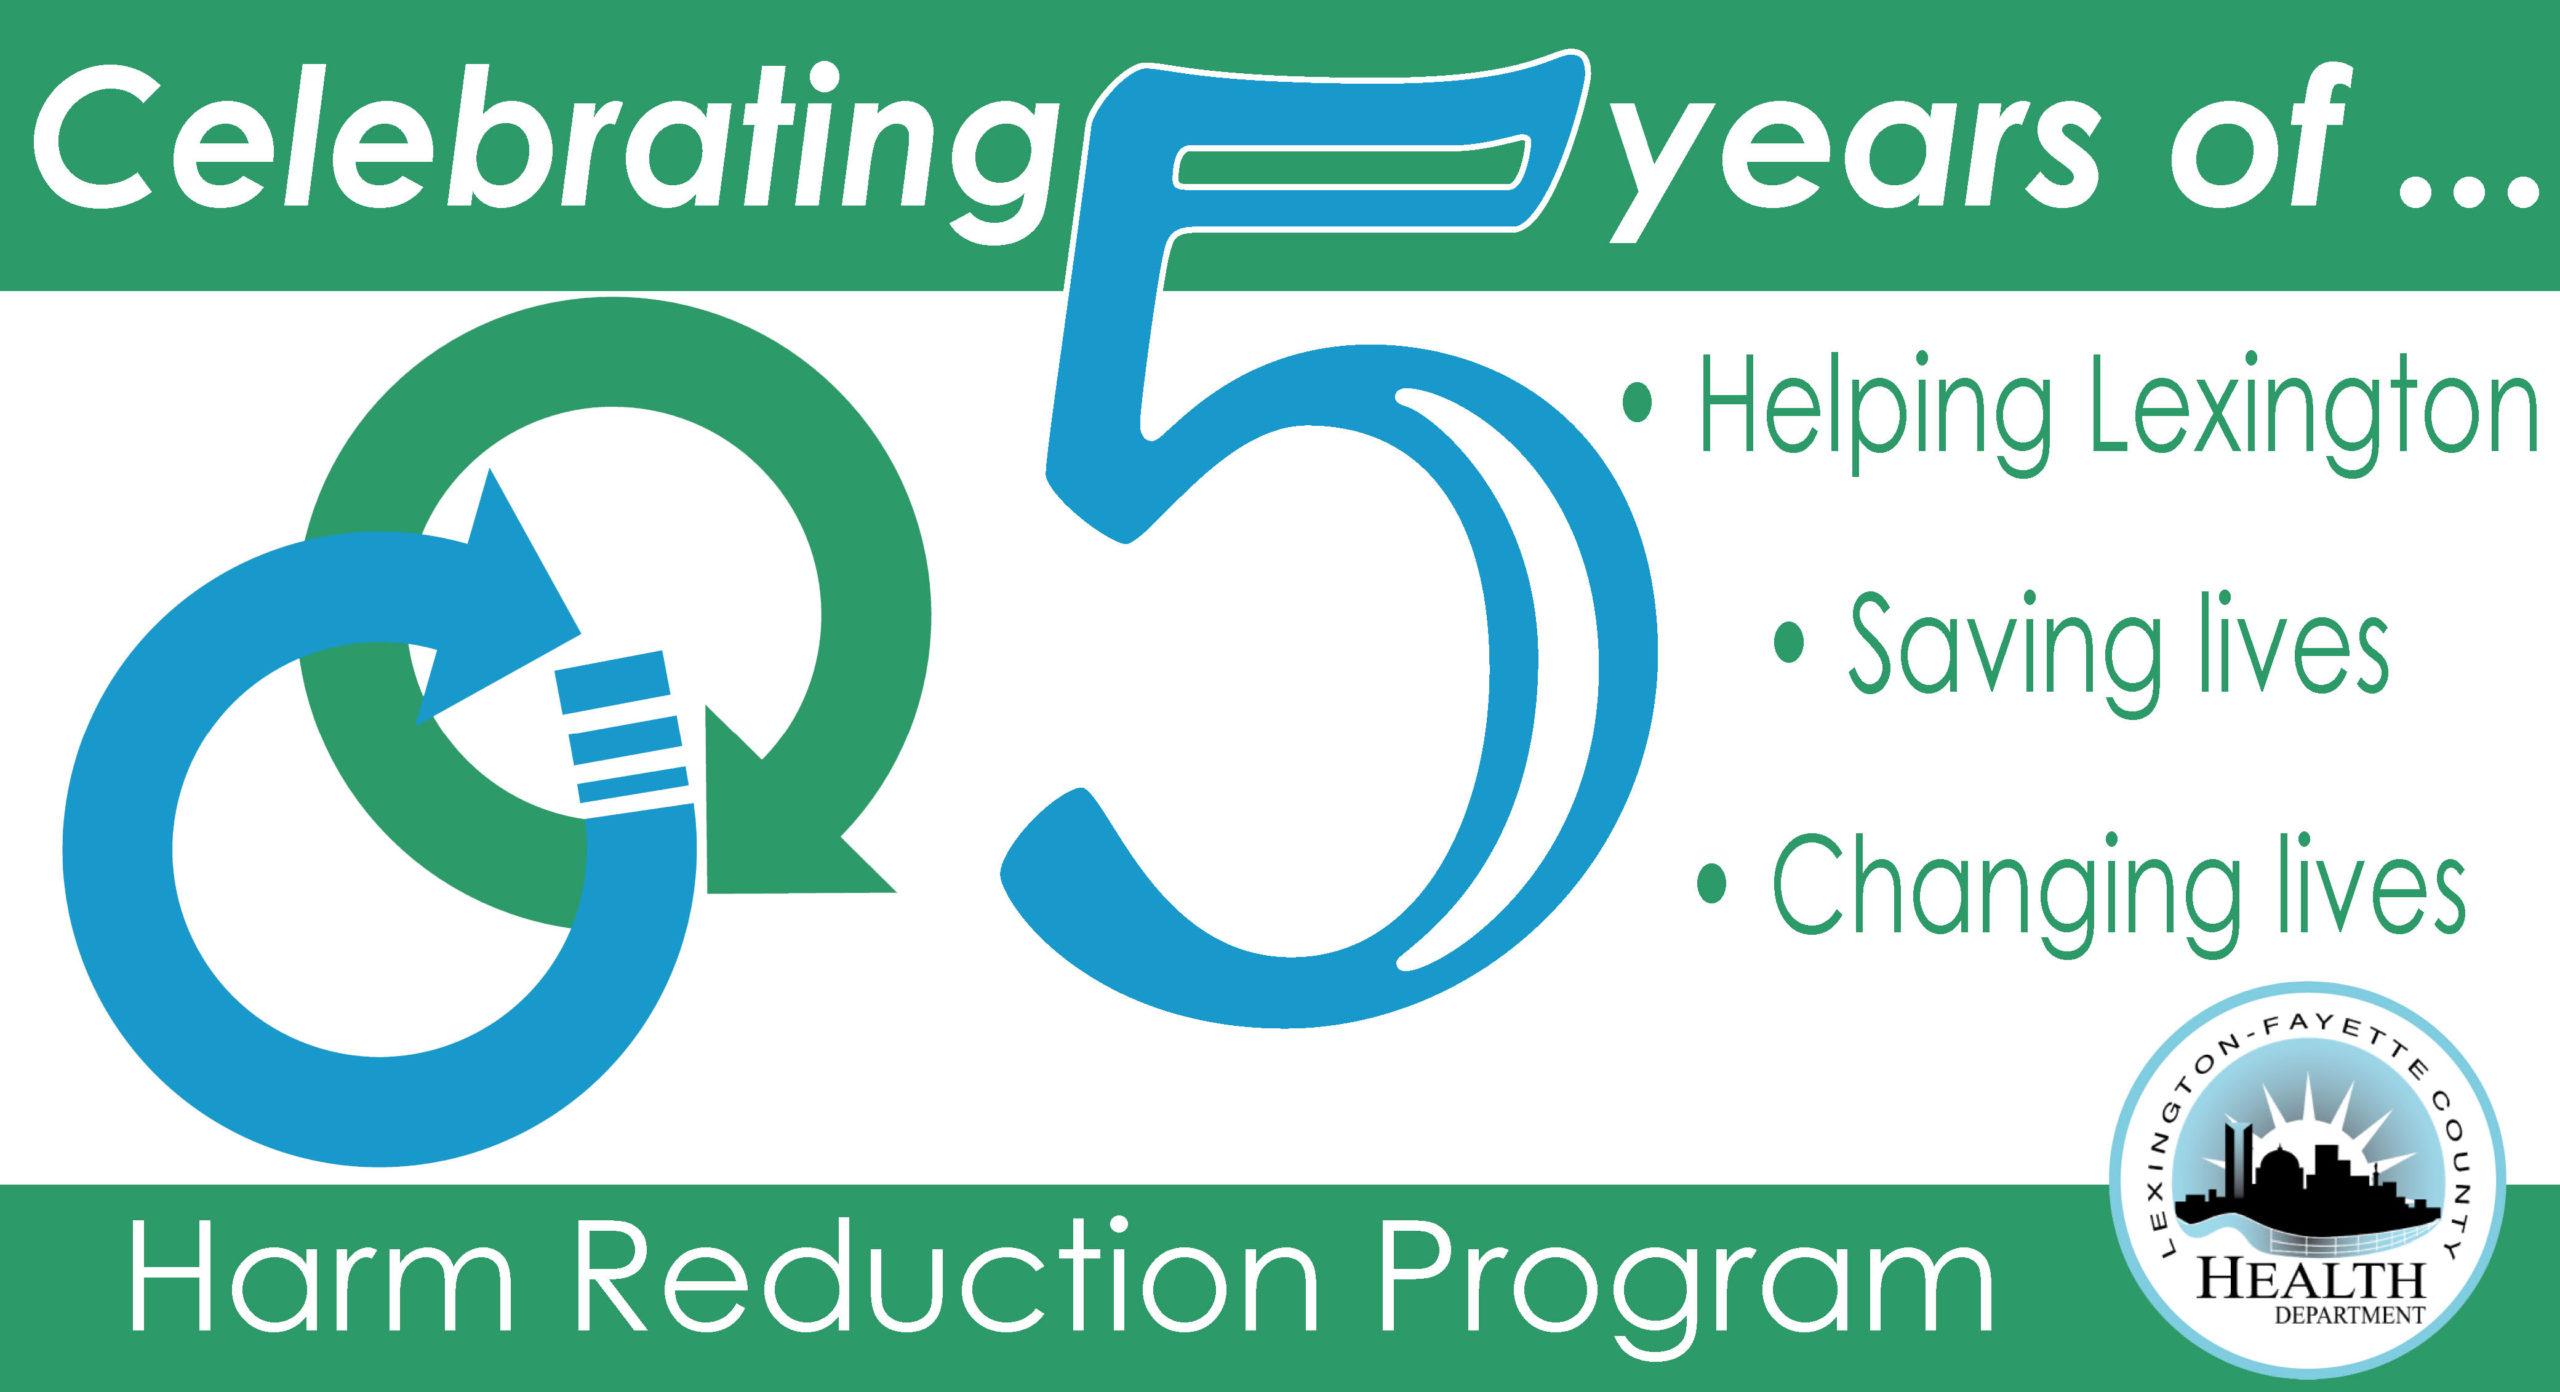 Harm reduction program celebrating 5th anniversary